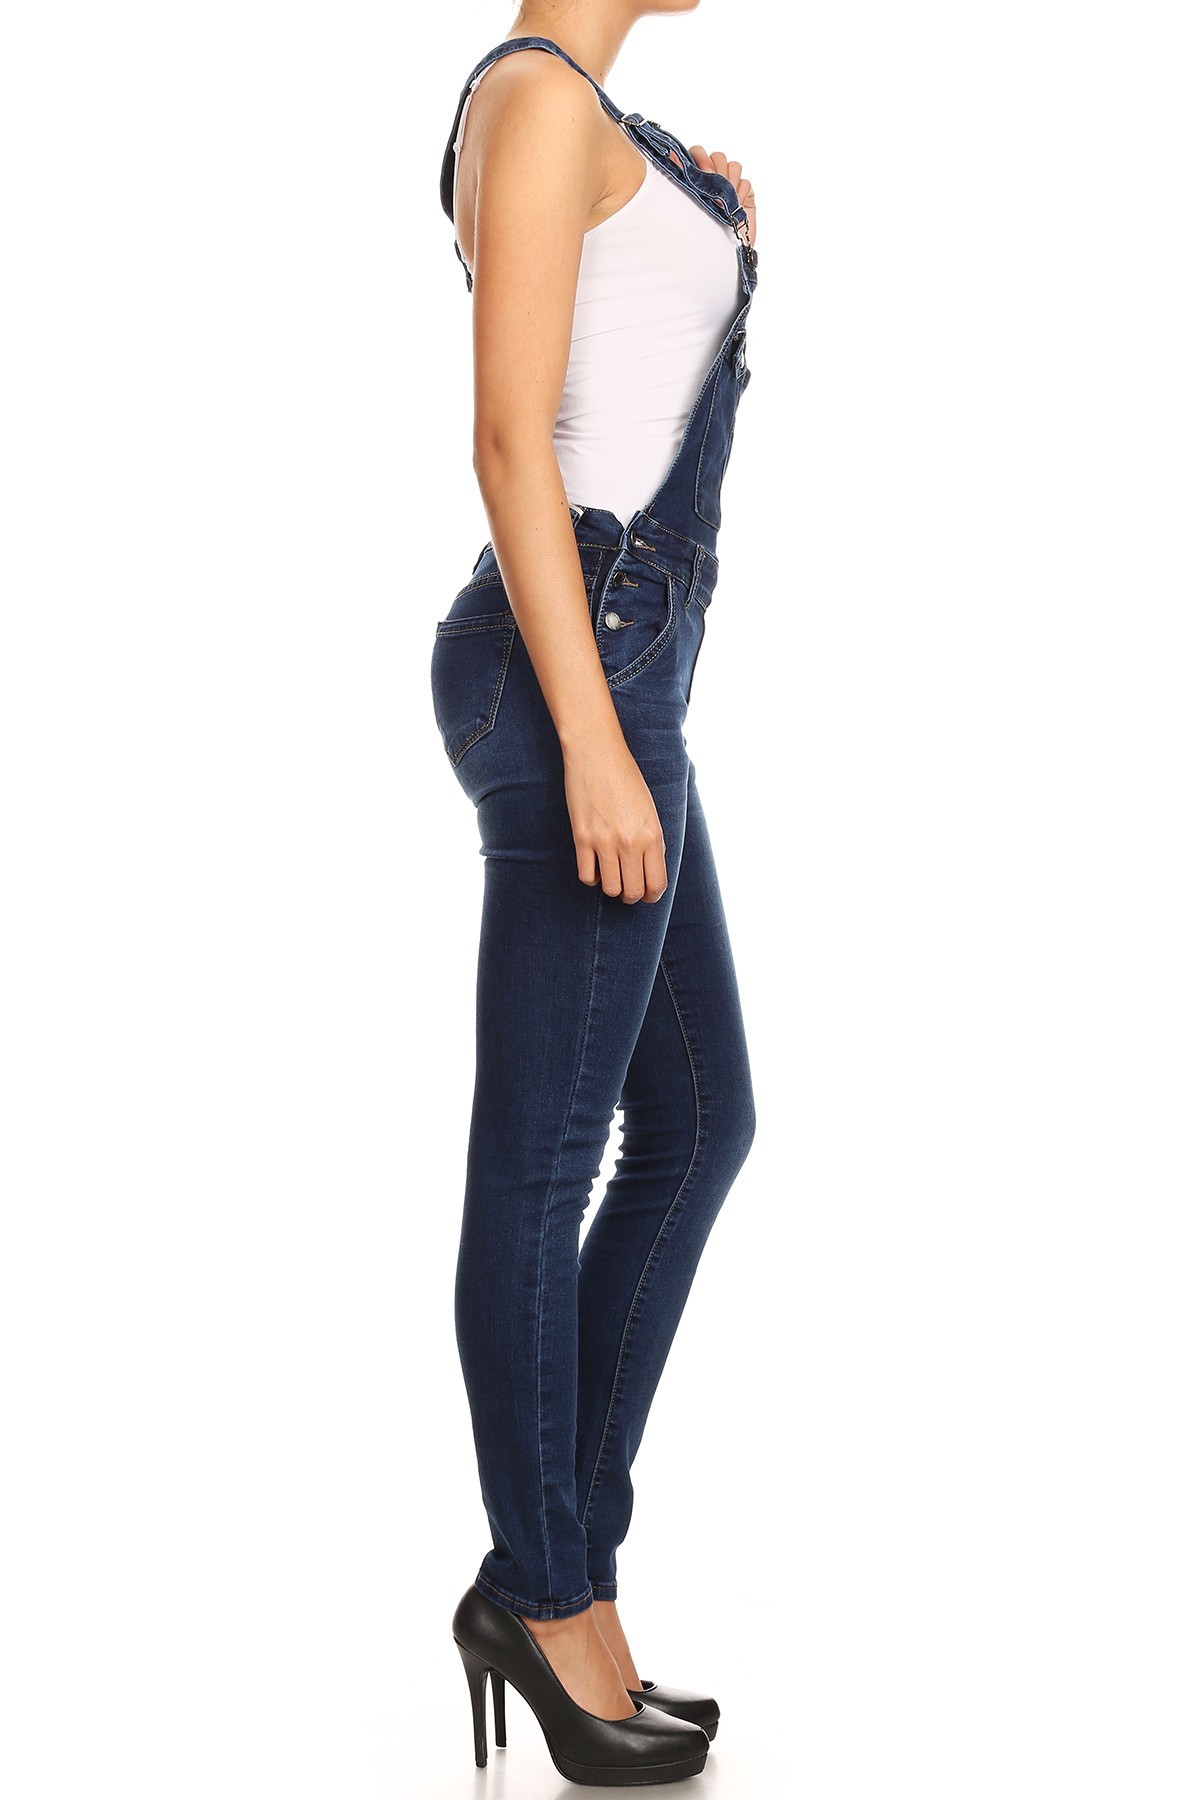 Fashion2Love Womens Juniors / Plus Stretch Denim Jean 6 Button Adjustable Straps Overalls - image 3 of 6